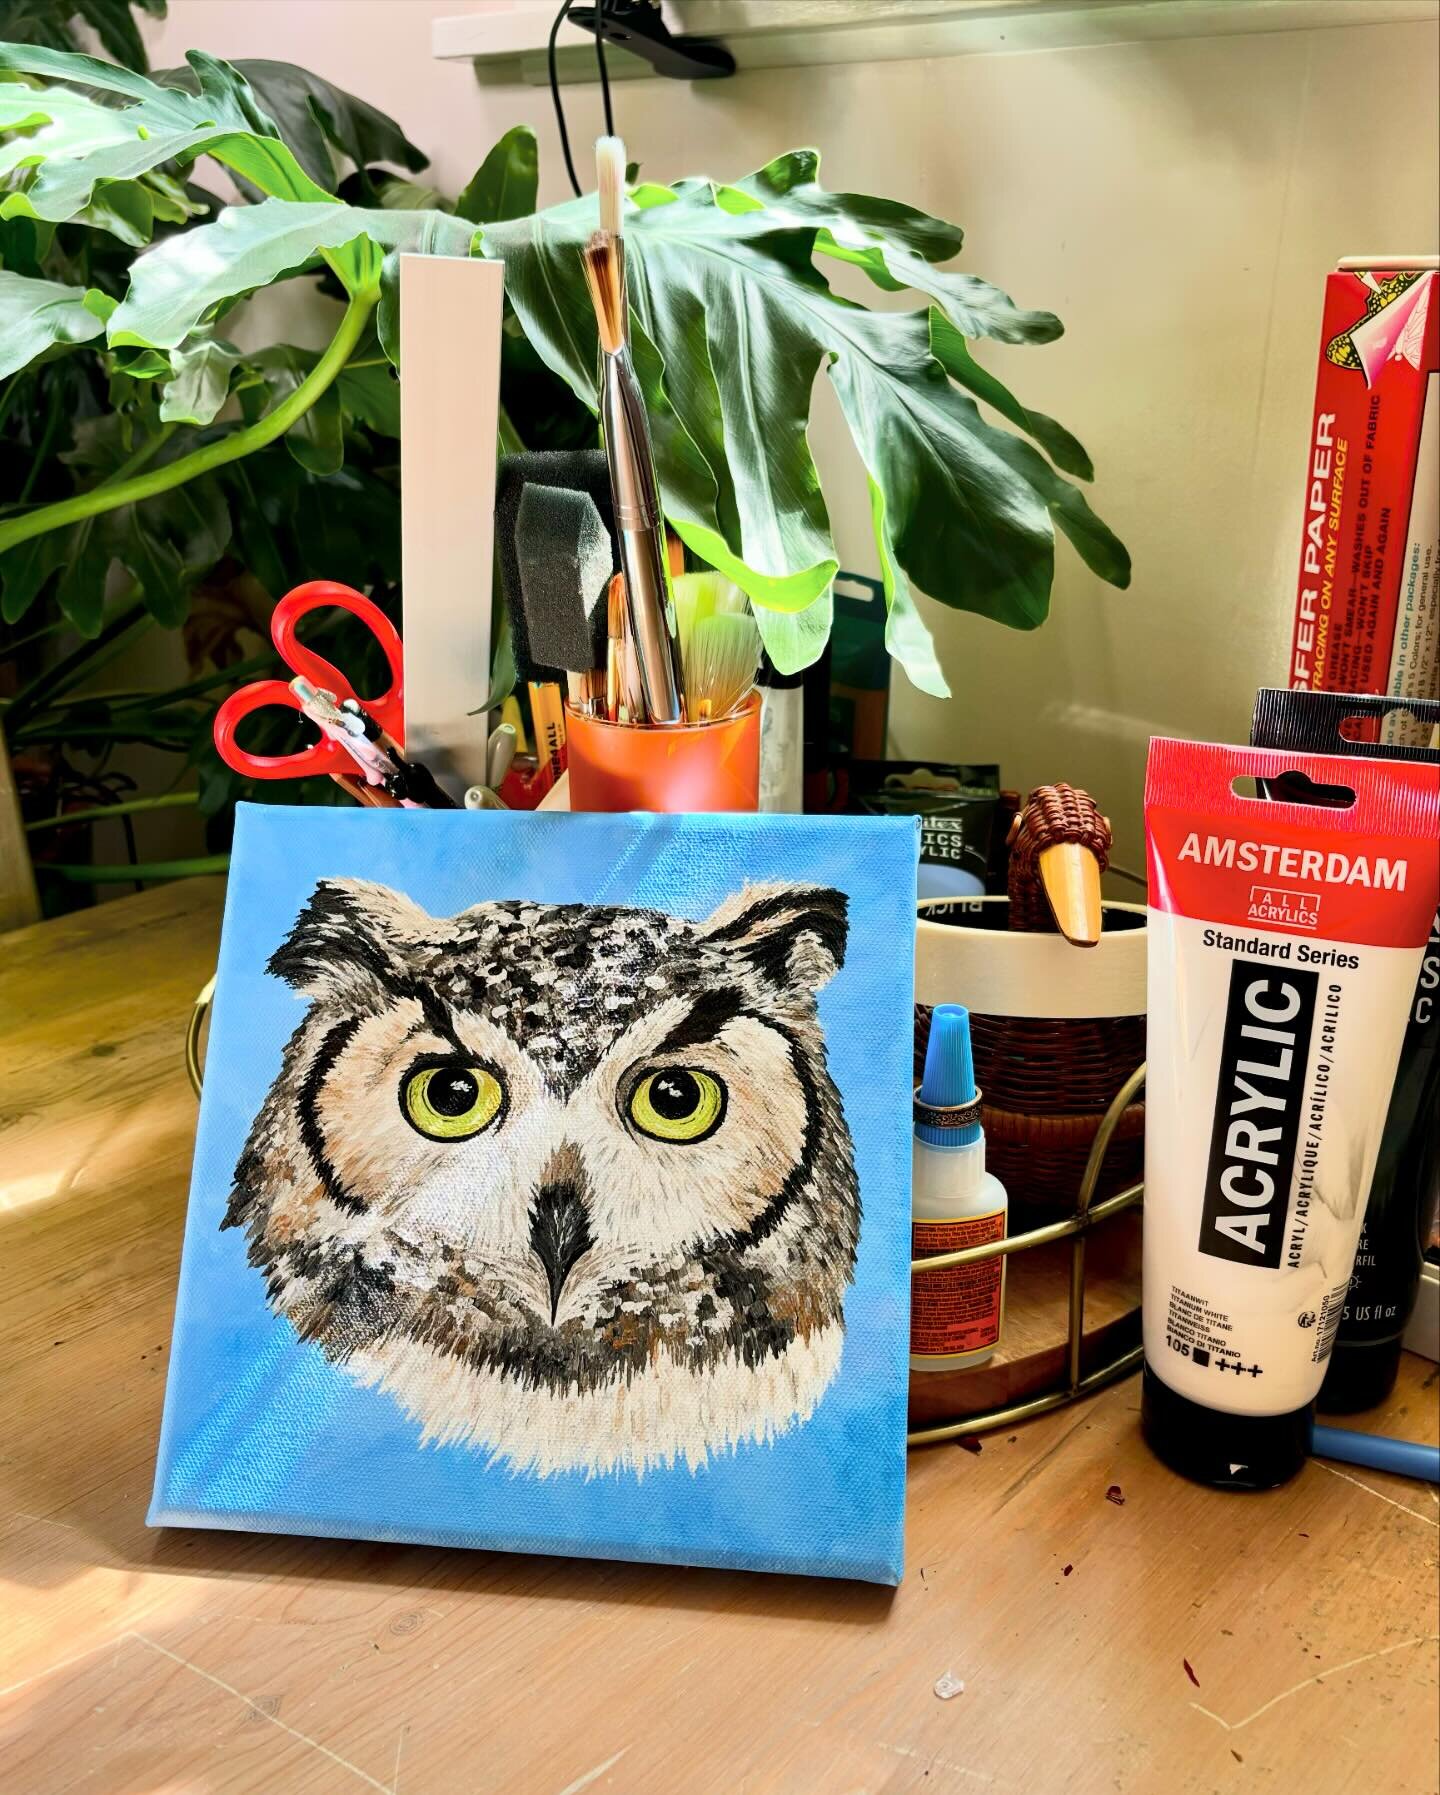 Great Horned Owl for Miranda and Nick 🦉💕

#owl #owlpainting #birdlovers #birdsofinstagram #greathornedowl #custompainting #acrylic #custommade #shoplocalkc #birds